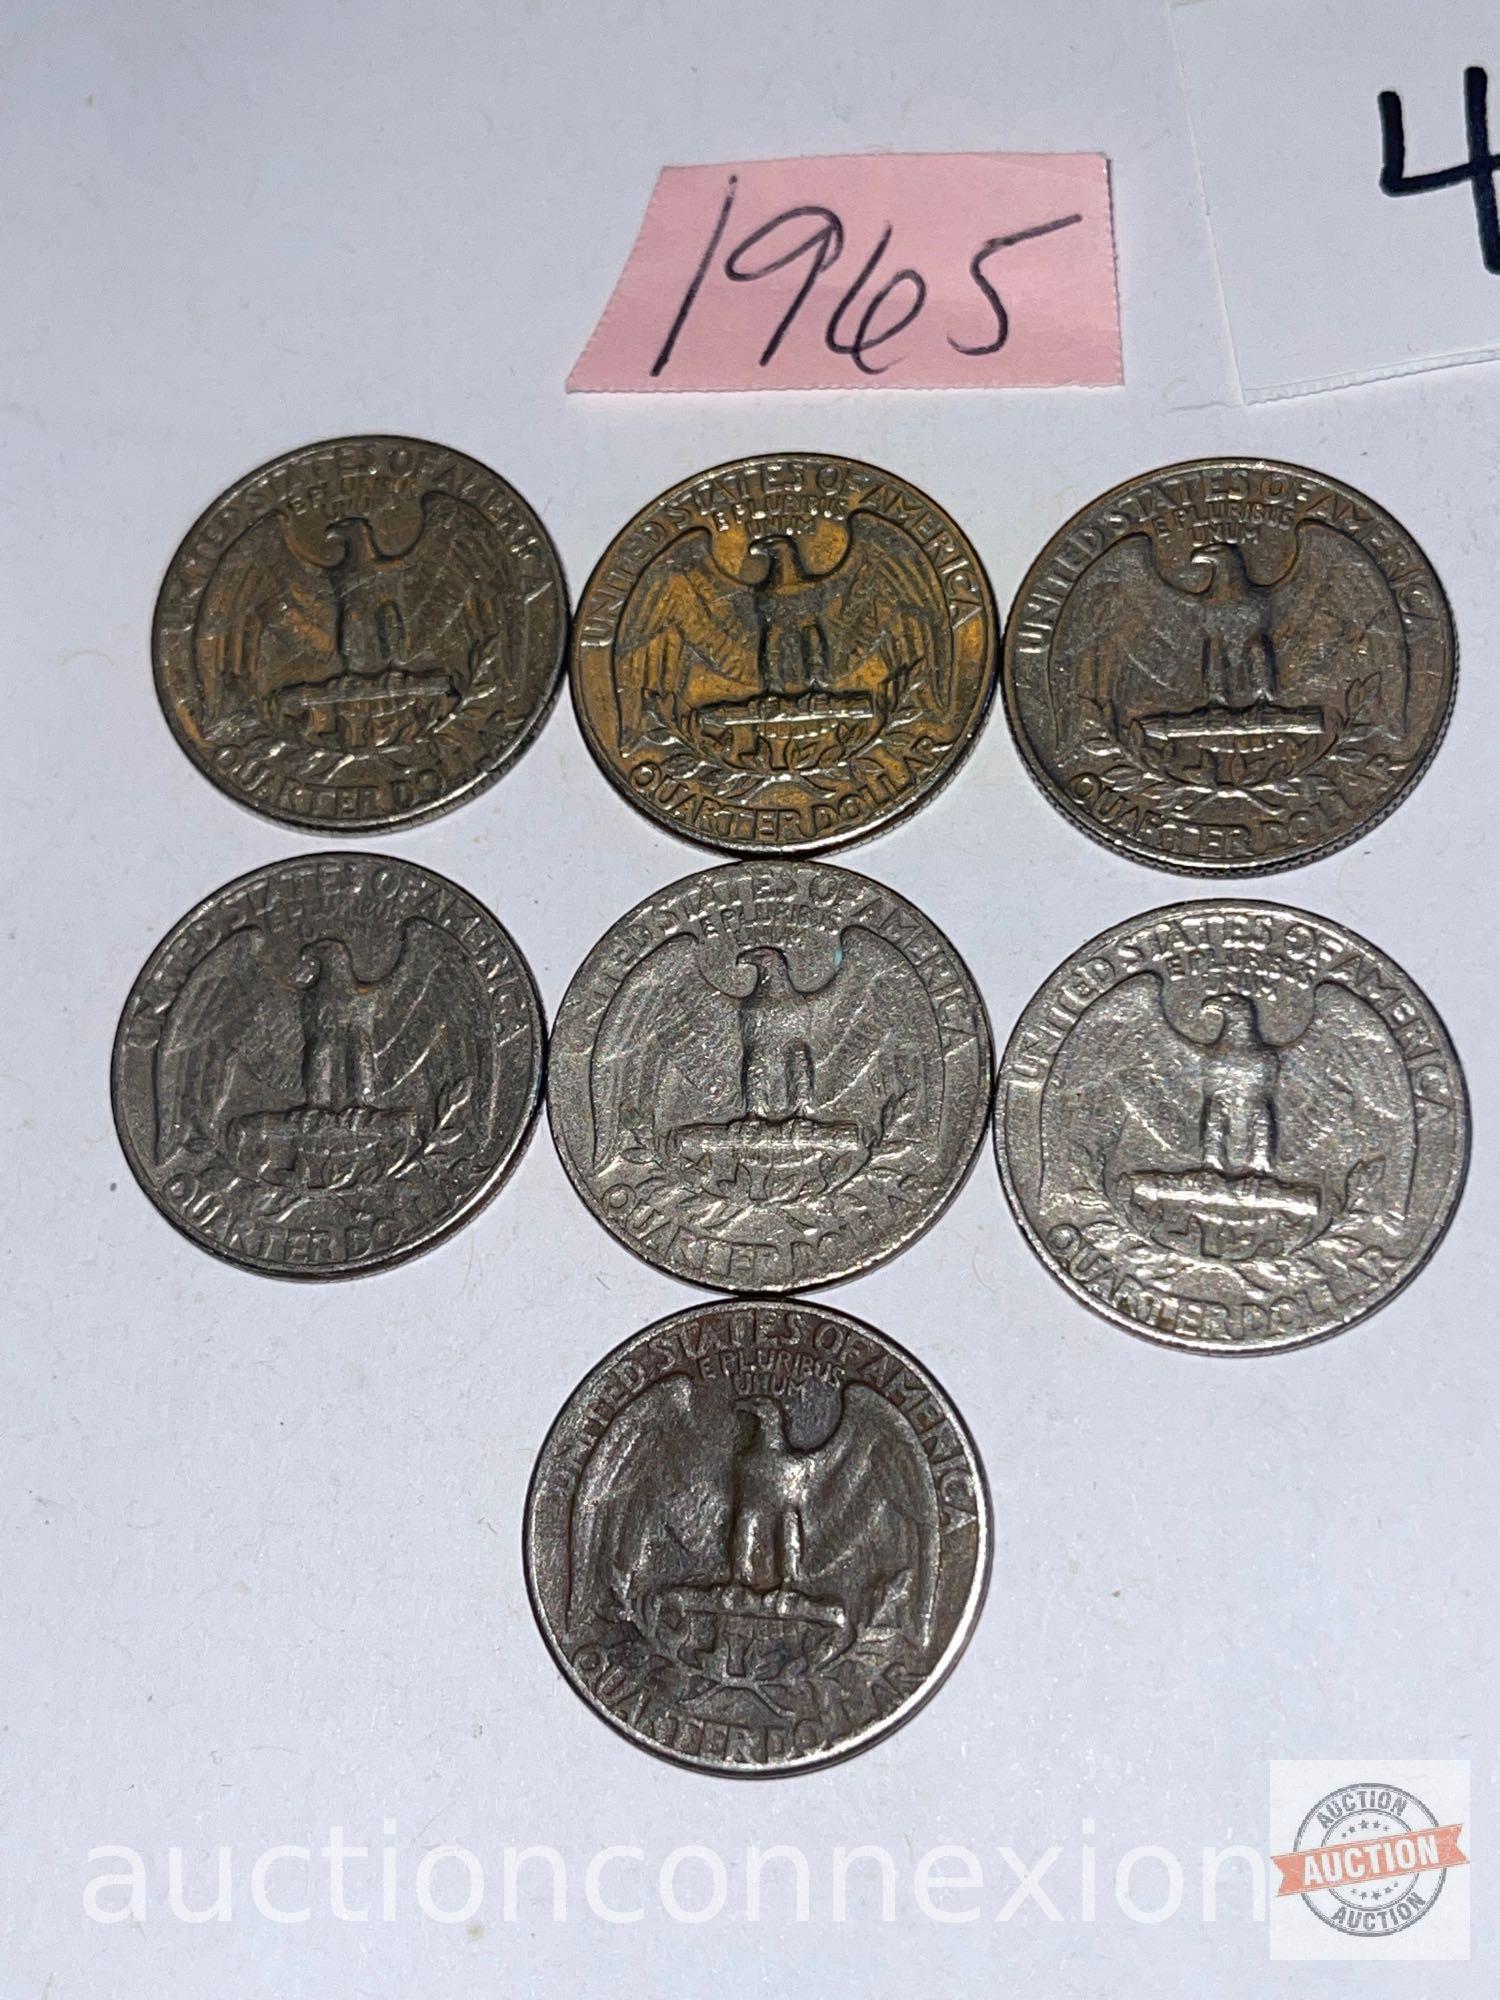 Coins - 11 Quarters - 7-1965, 3-1966 Washington quarters, 1-1997 Colorized New Jersey state quarter